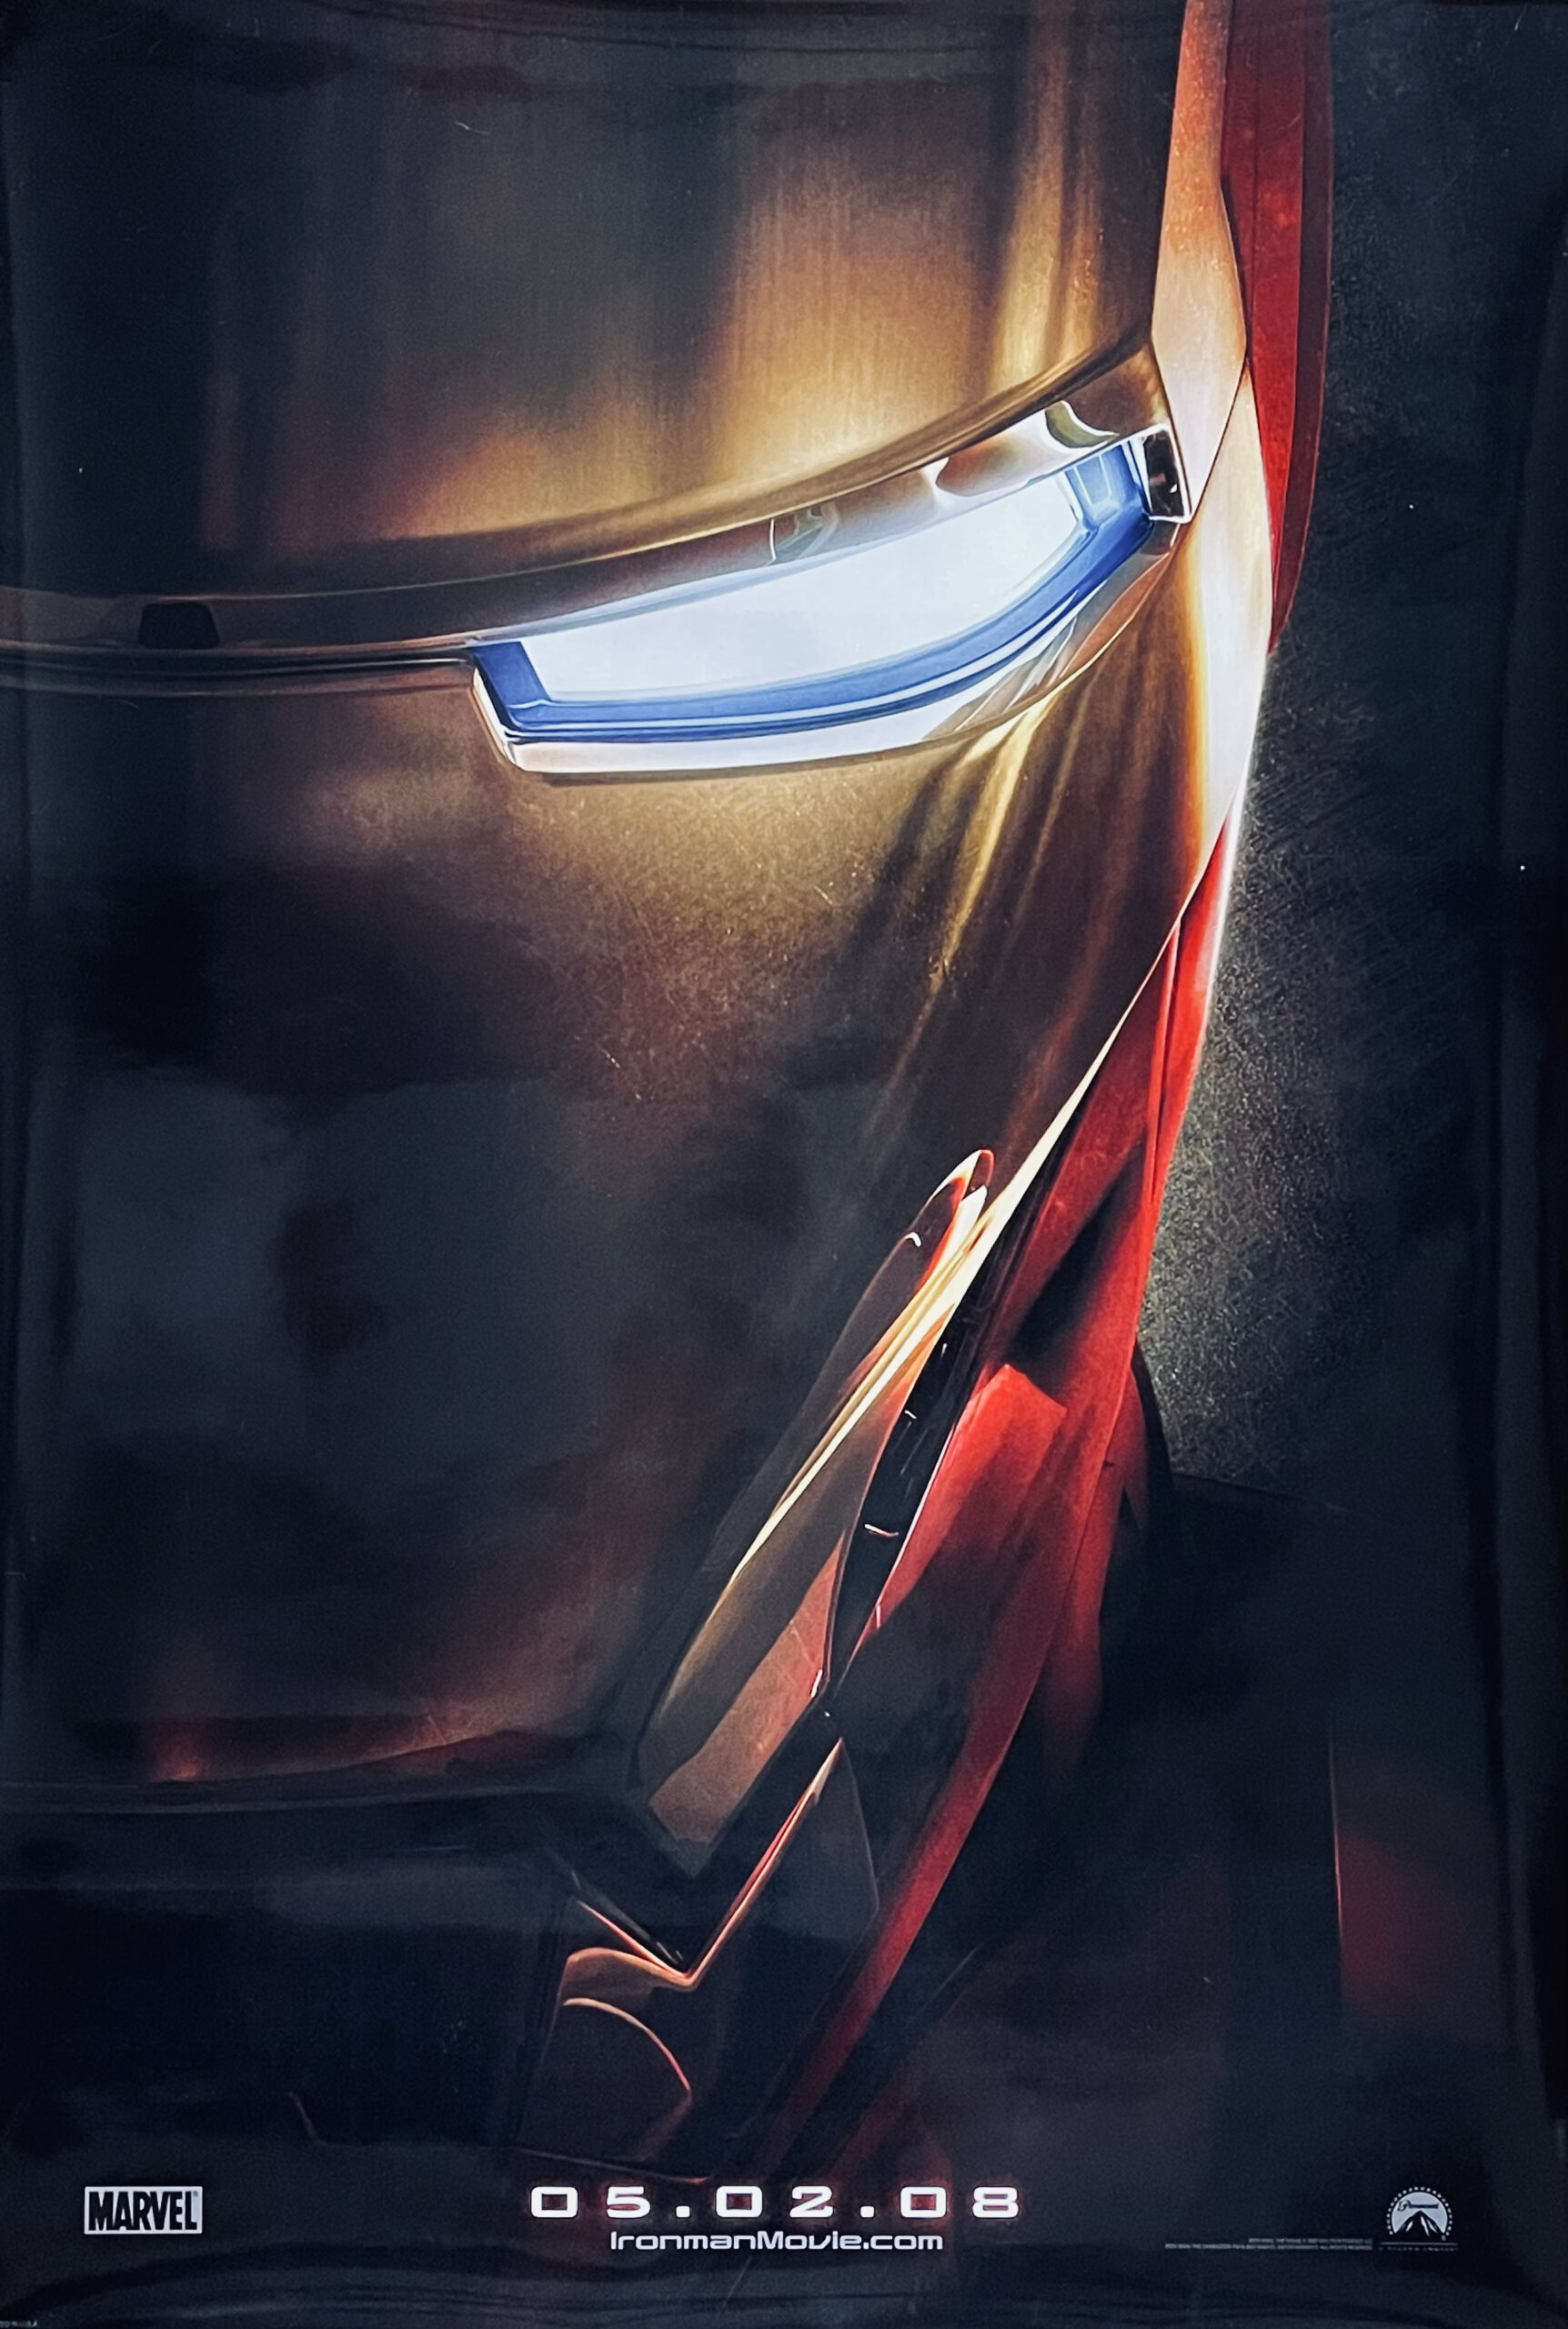 Iron man poster - randomlat